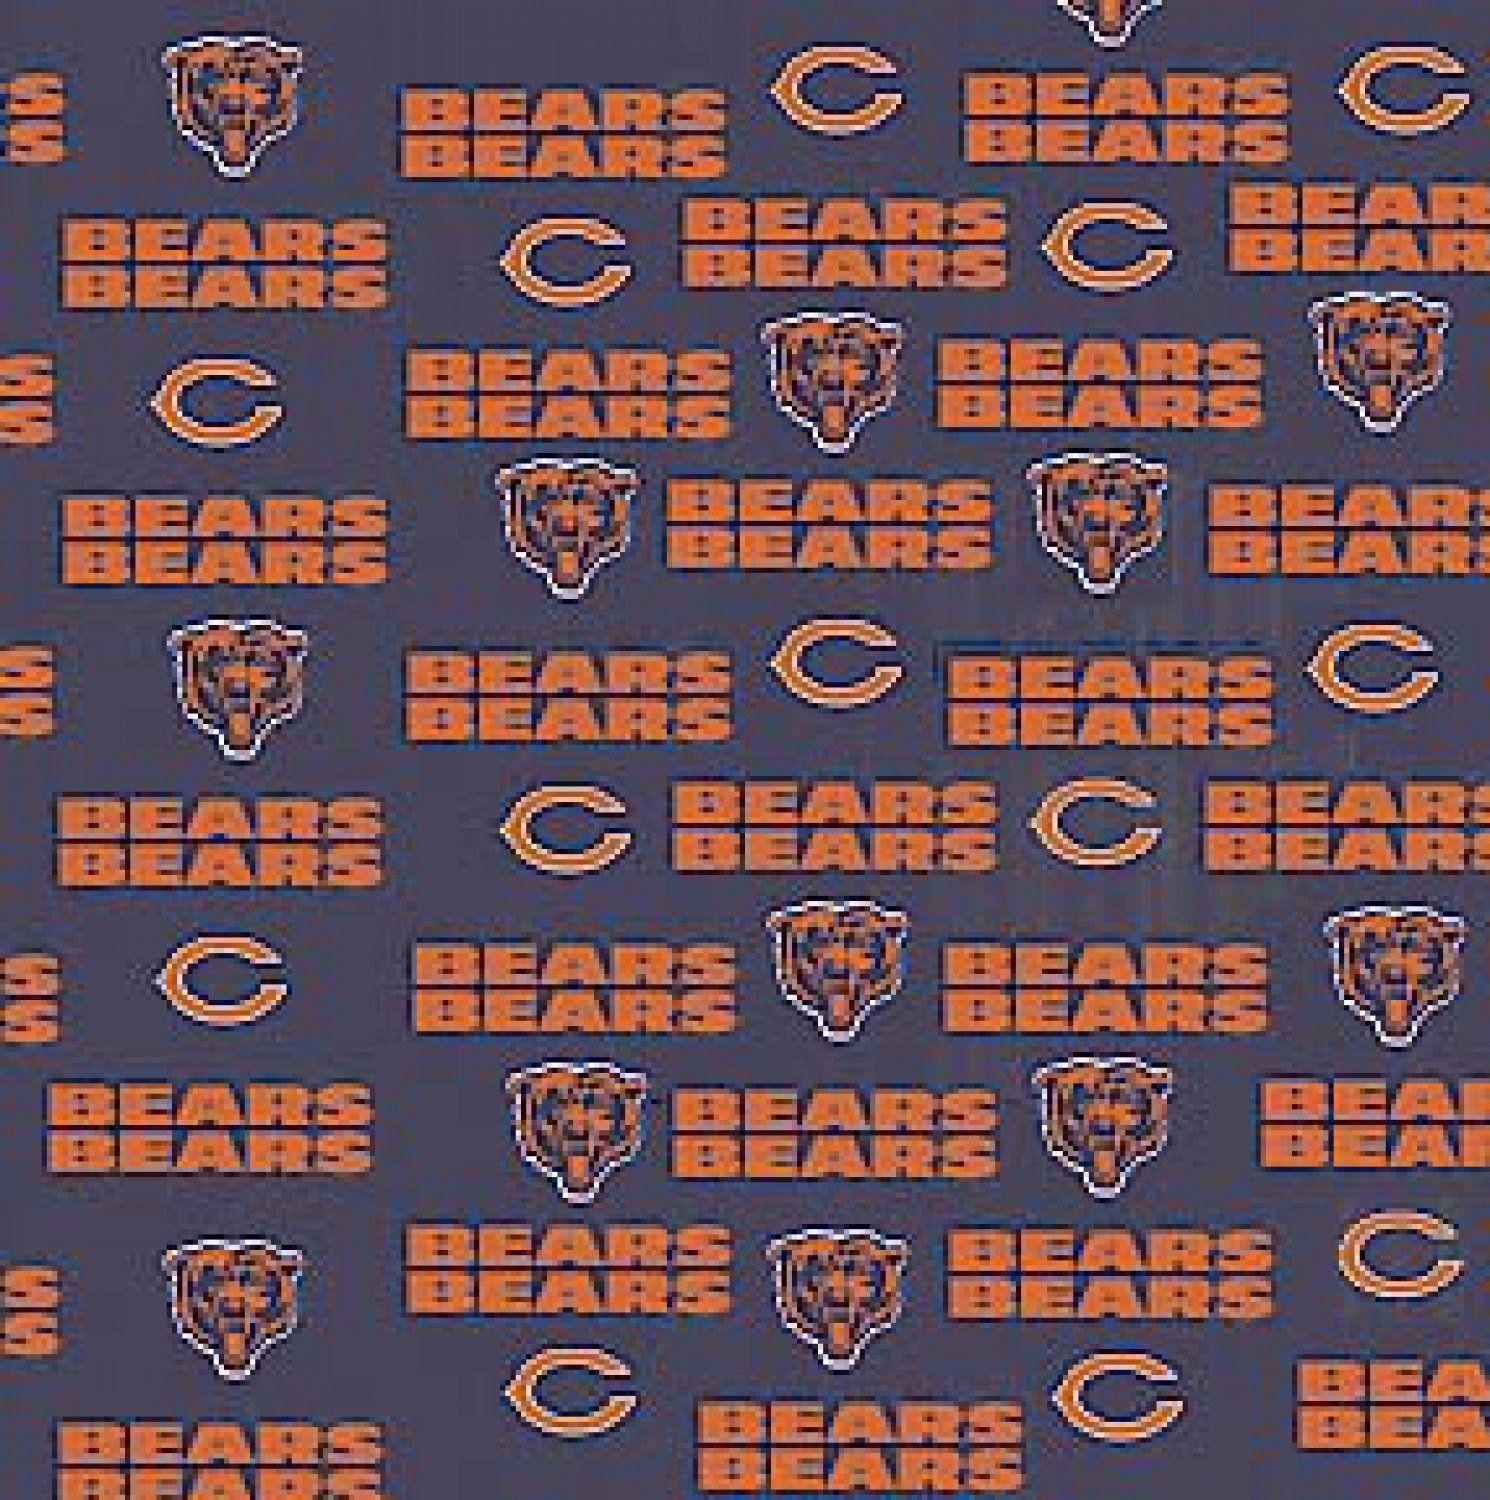 Bears C Logo - Chicago Bears fabric NFL National Football League navy orange